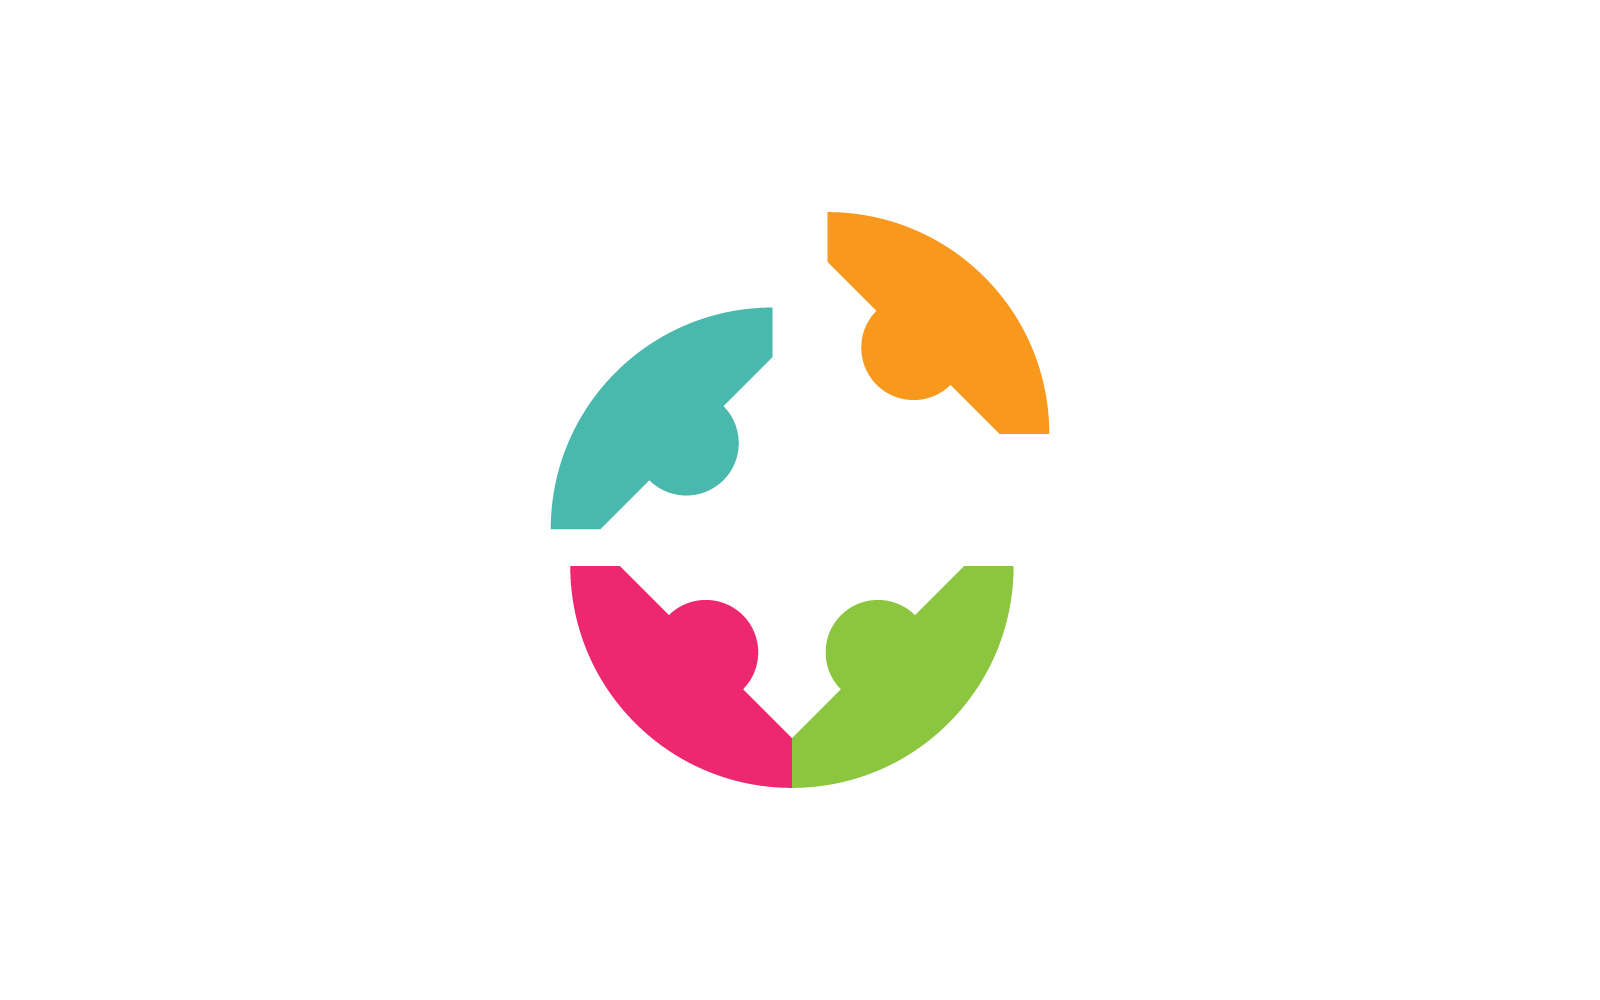 Community, network and social logo illustration icon vector design